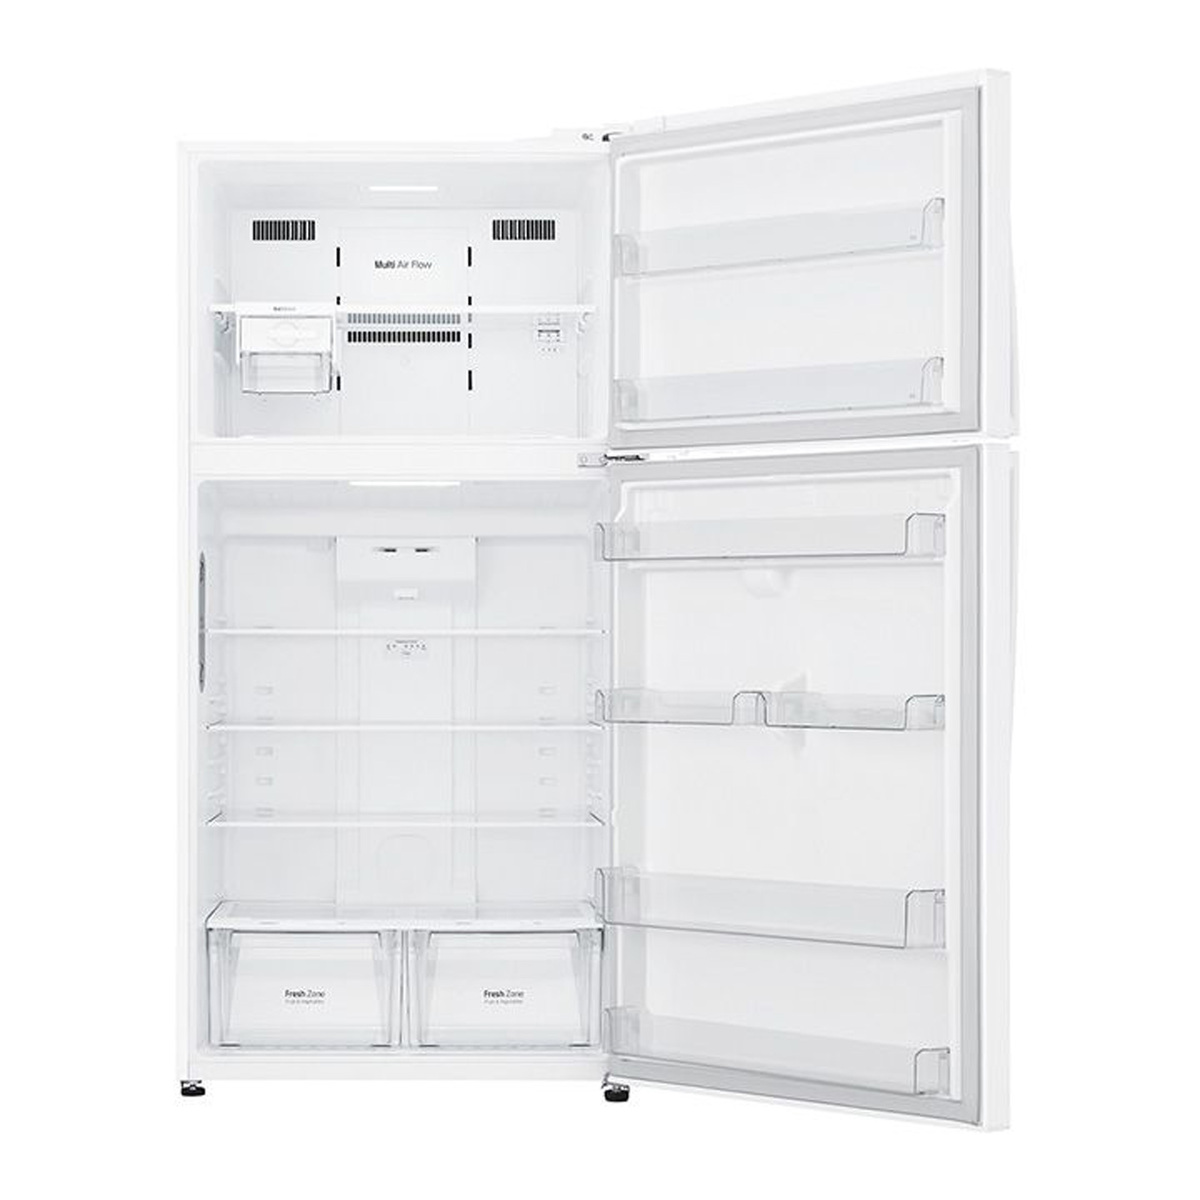 LG Double Door Refrigerator, 830 L, White, GR-C842HBCM